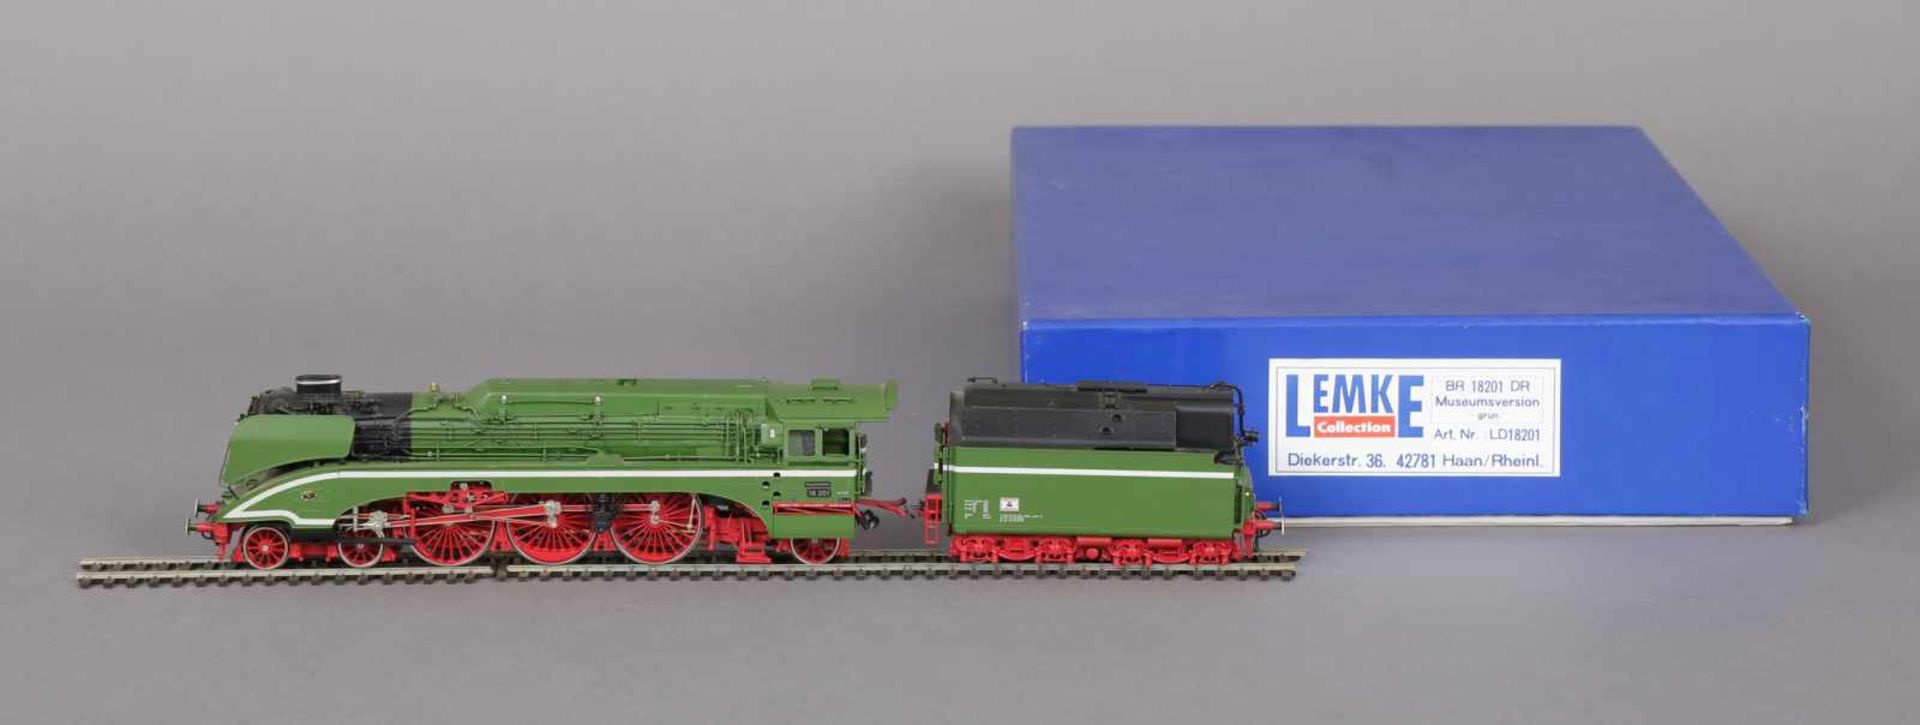 Lemke Modell-Lok mit Tender Modell BR 18201 DR, Museumsversion, grün, Art. LD 18201, Messingmodell